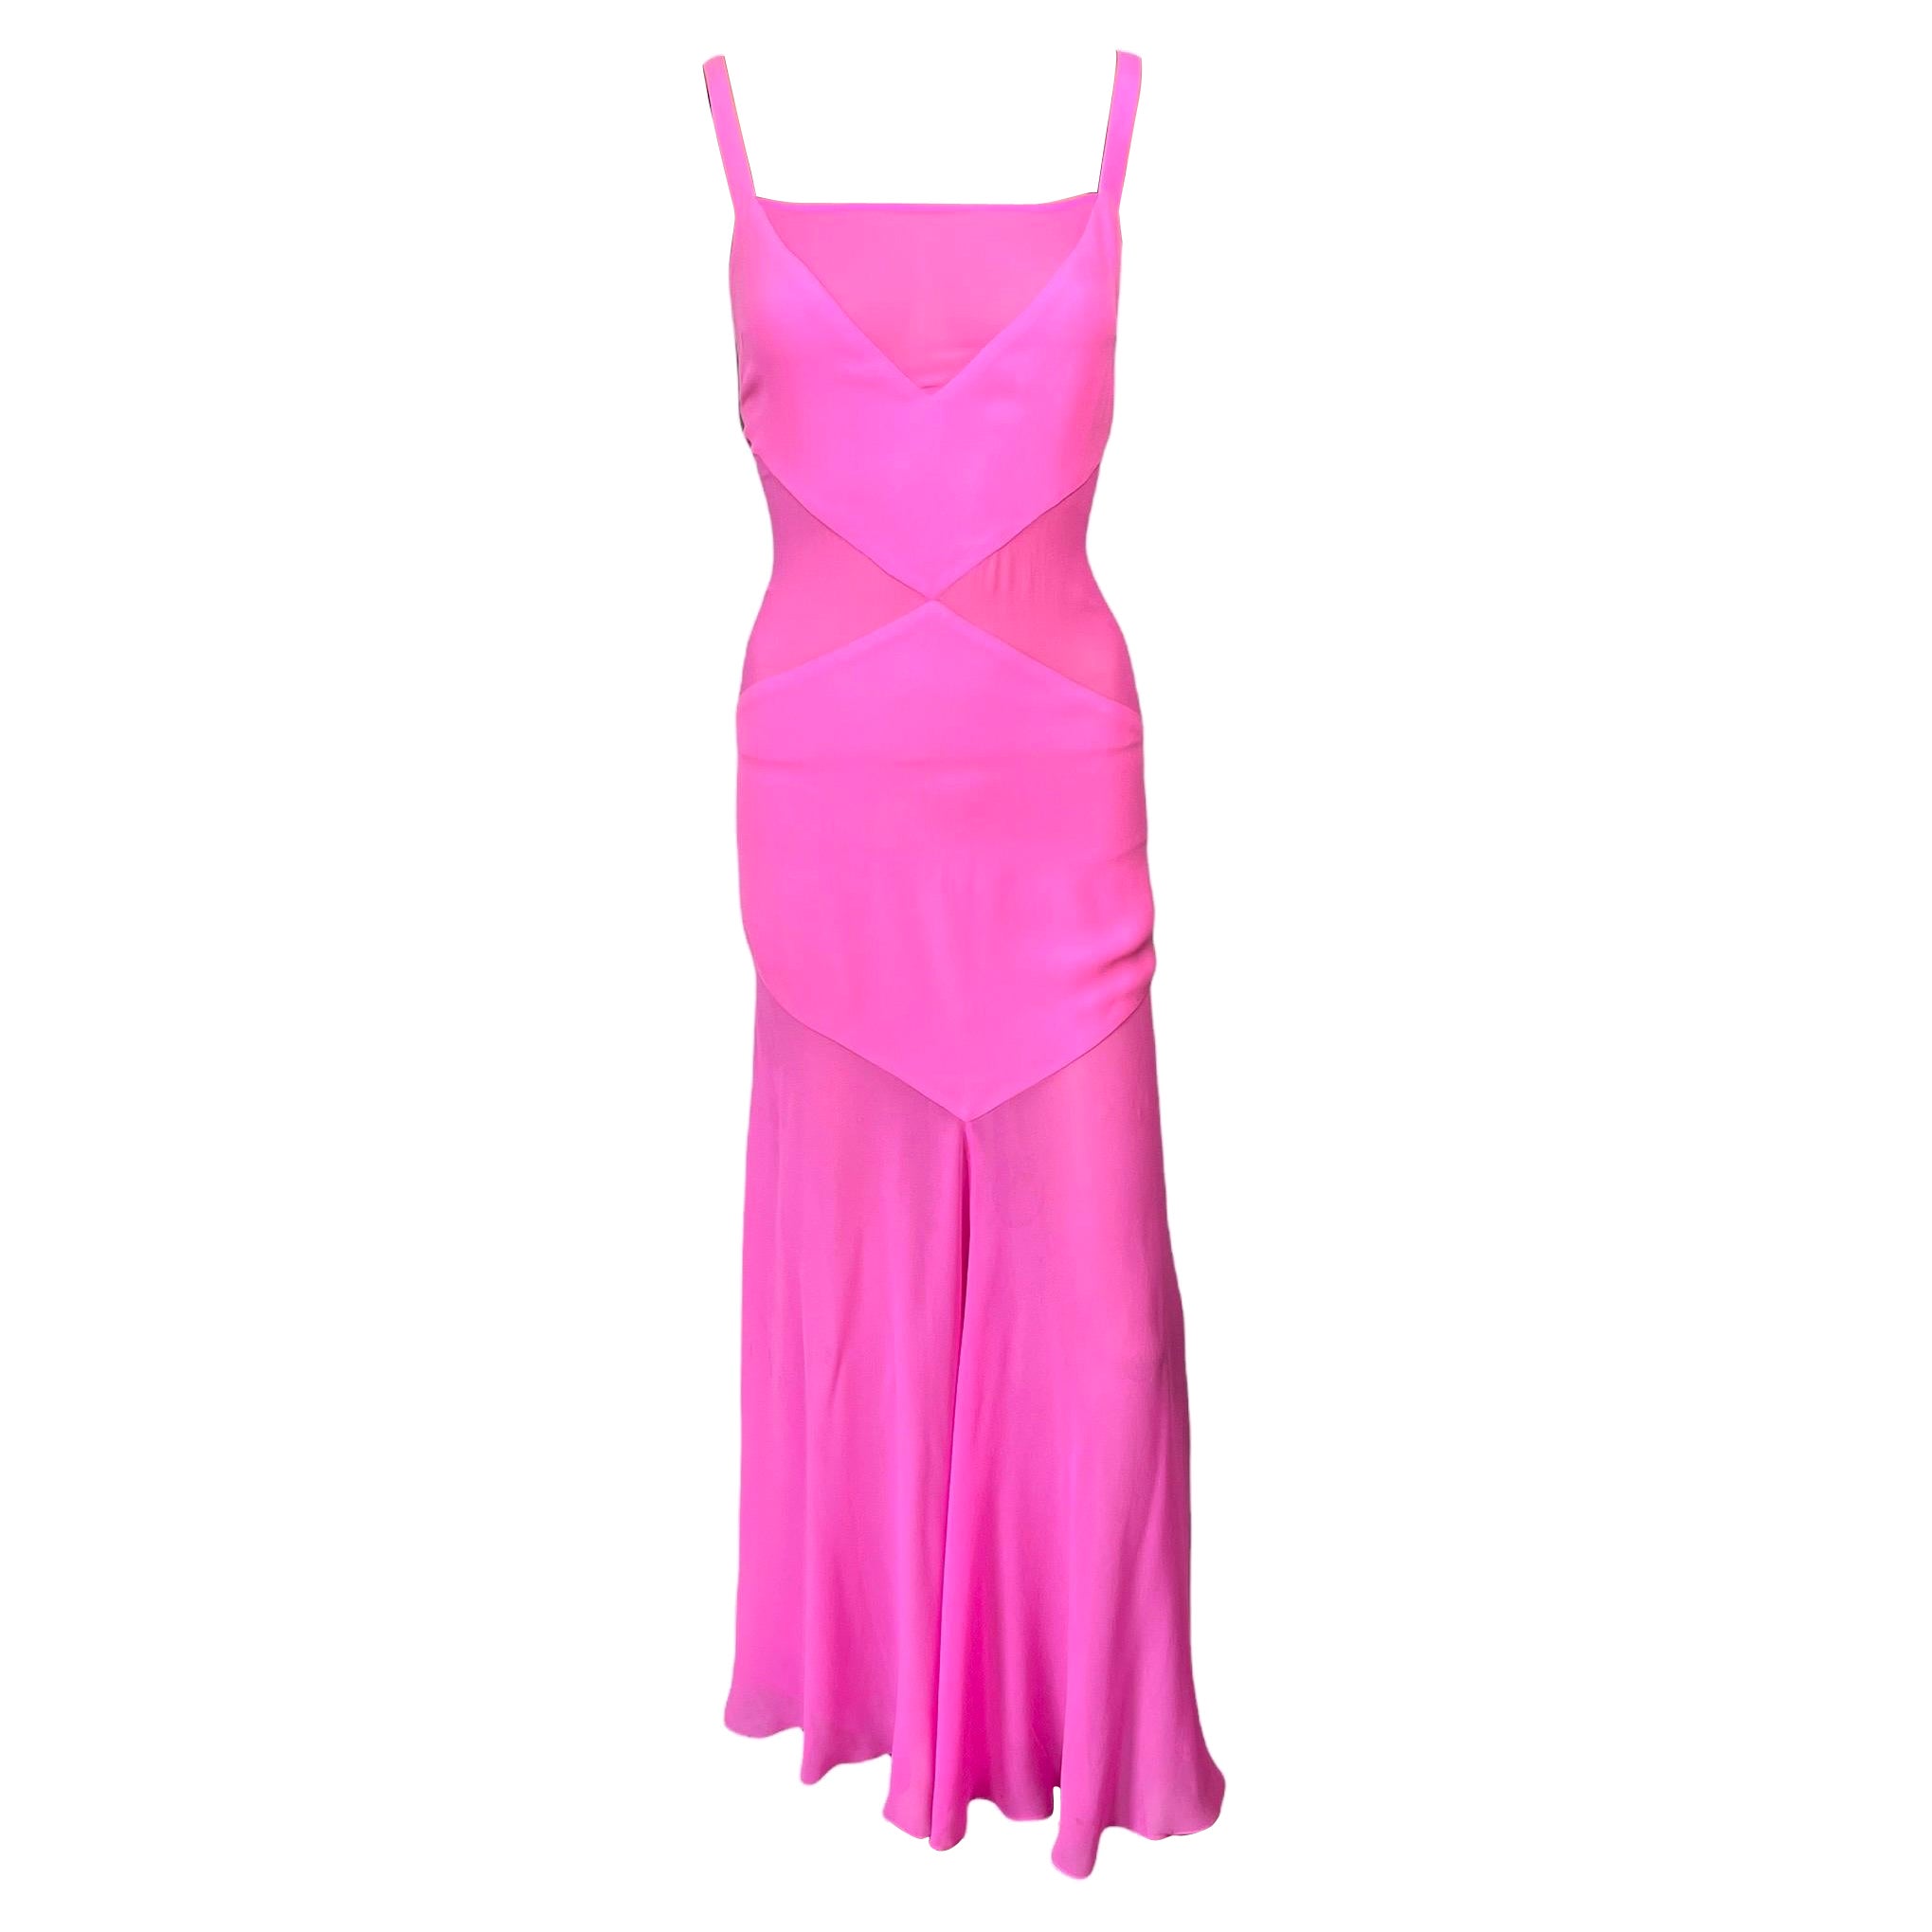 Gianni Versace S/S 1995 Vintage Sheer Panels Silk Pink Evening Dress Gown